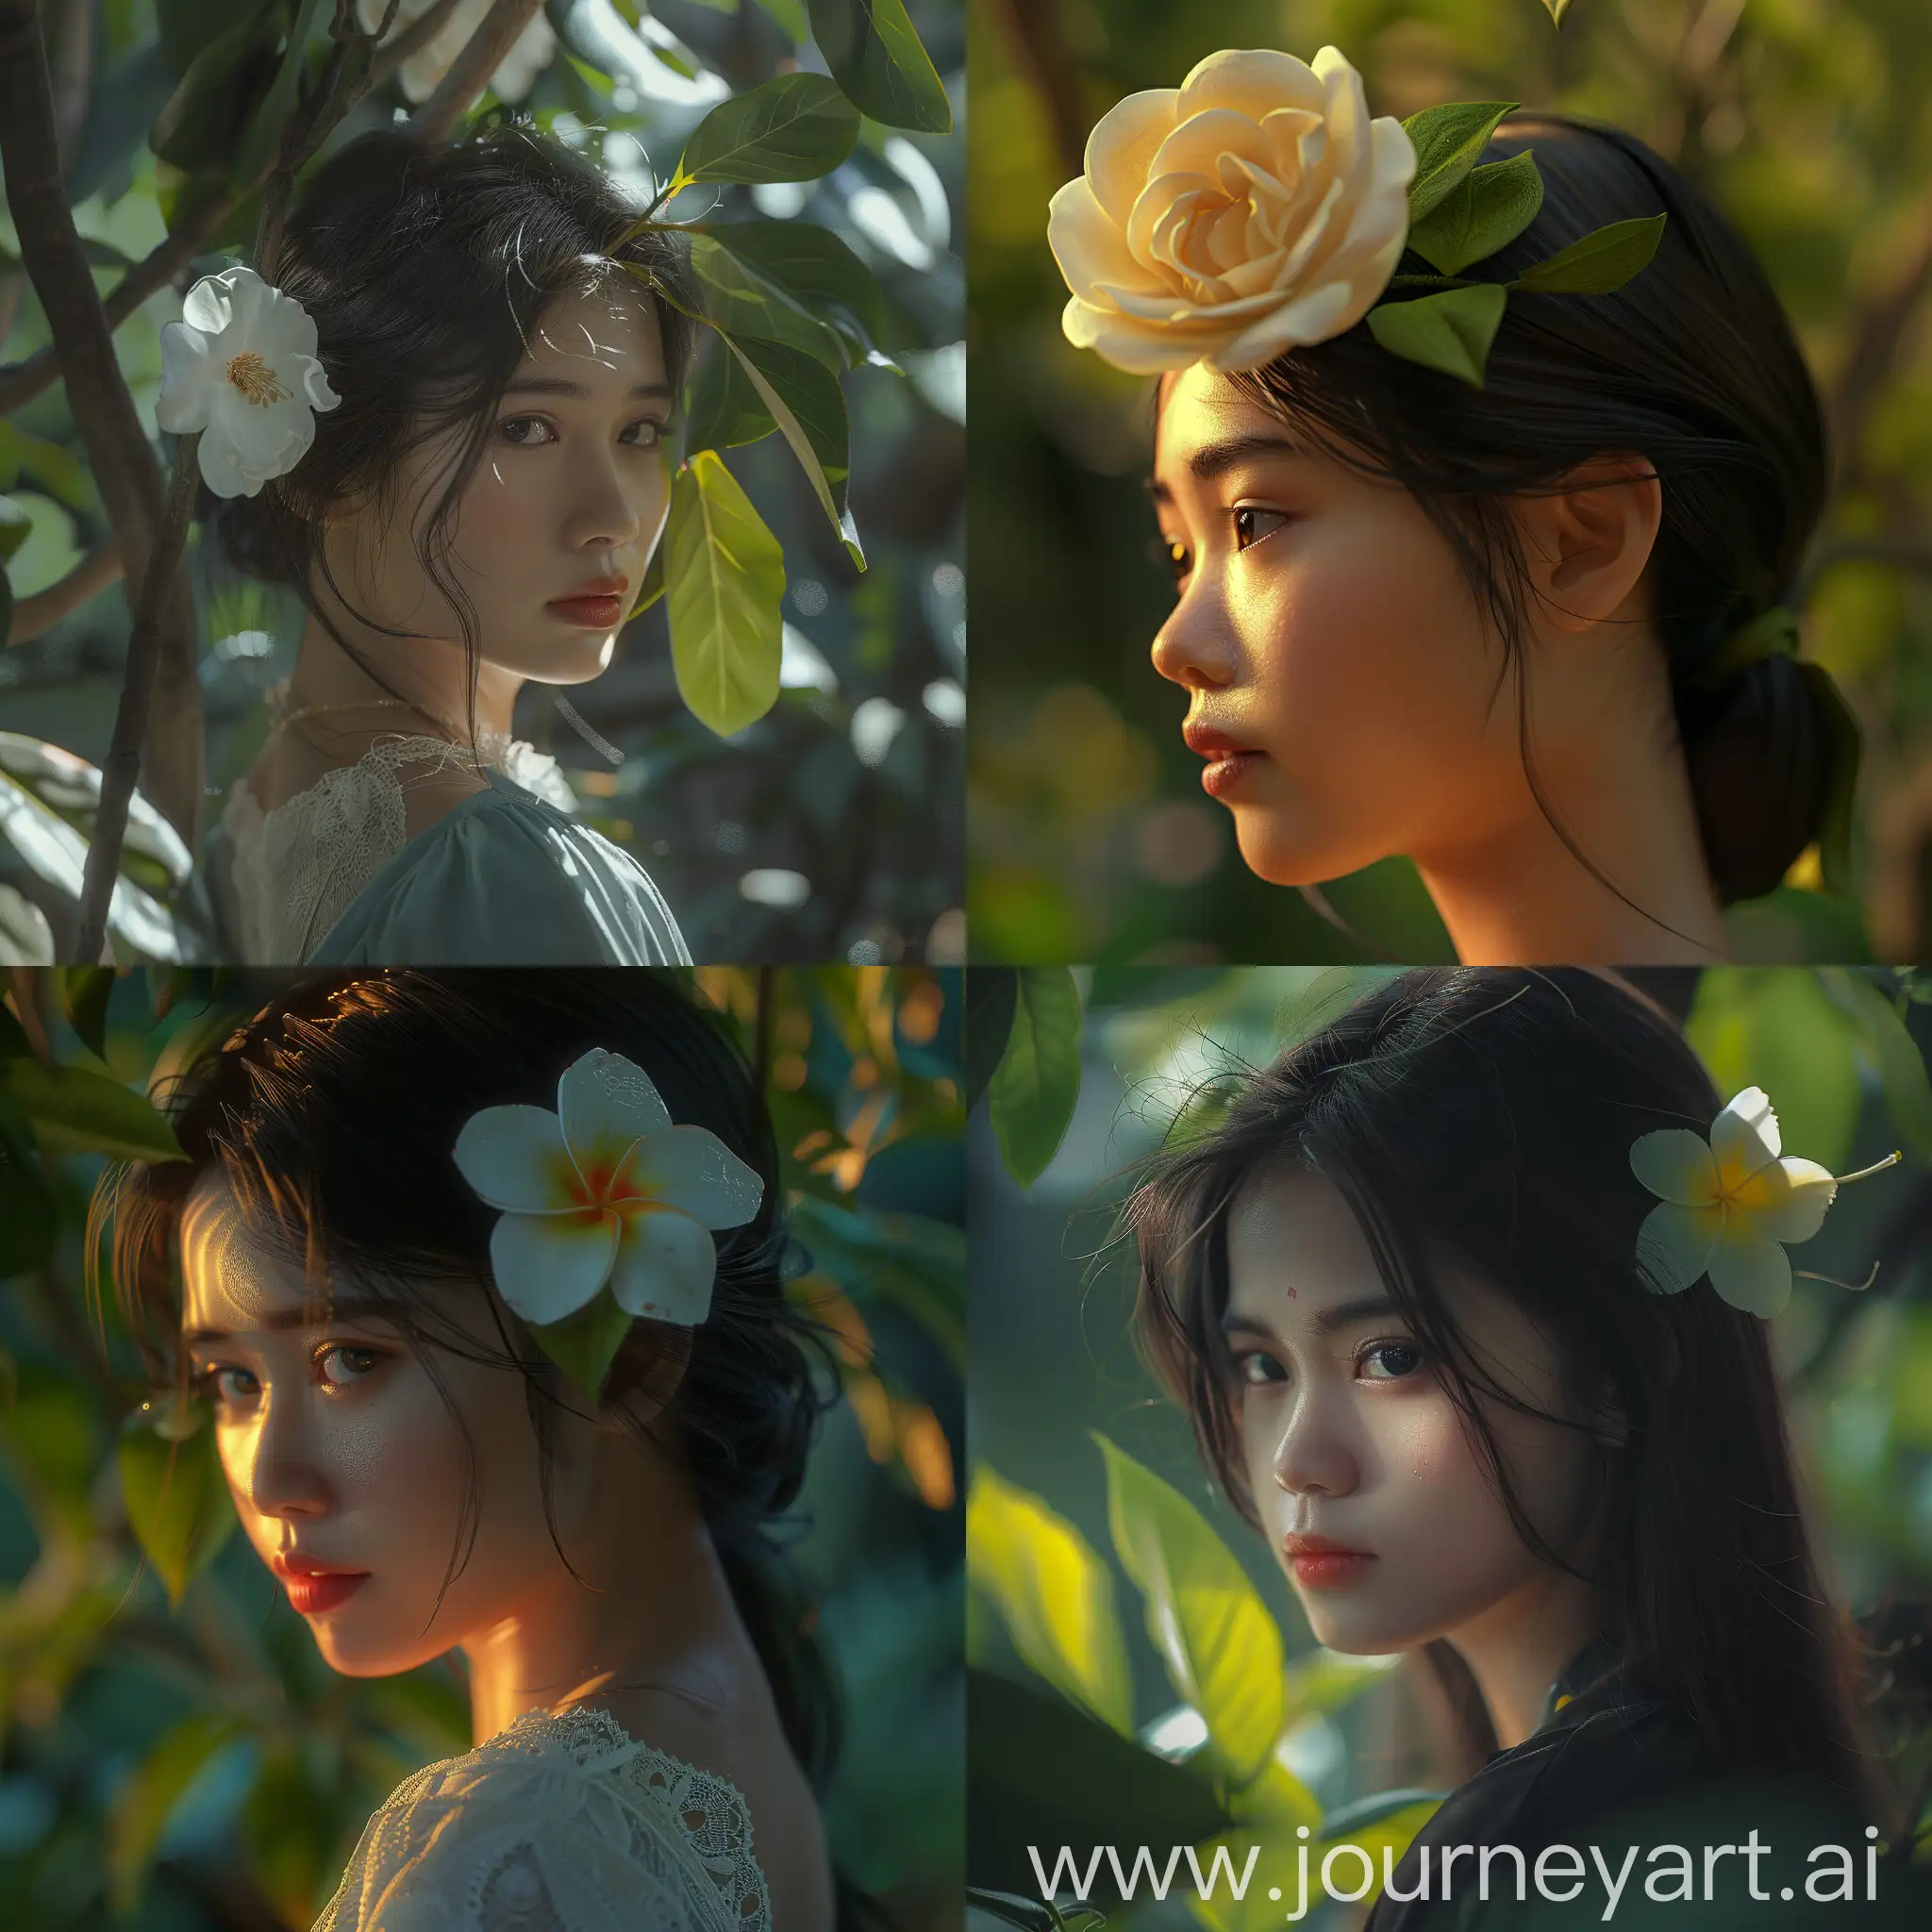 Myanmar-Girl-with-Flower-Crown-in-Garden-HD-Detailed-8K-Portrait-of-a-Beautiful-20YearOld-Woman